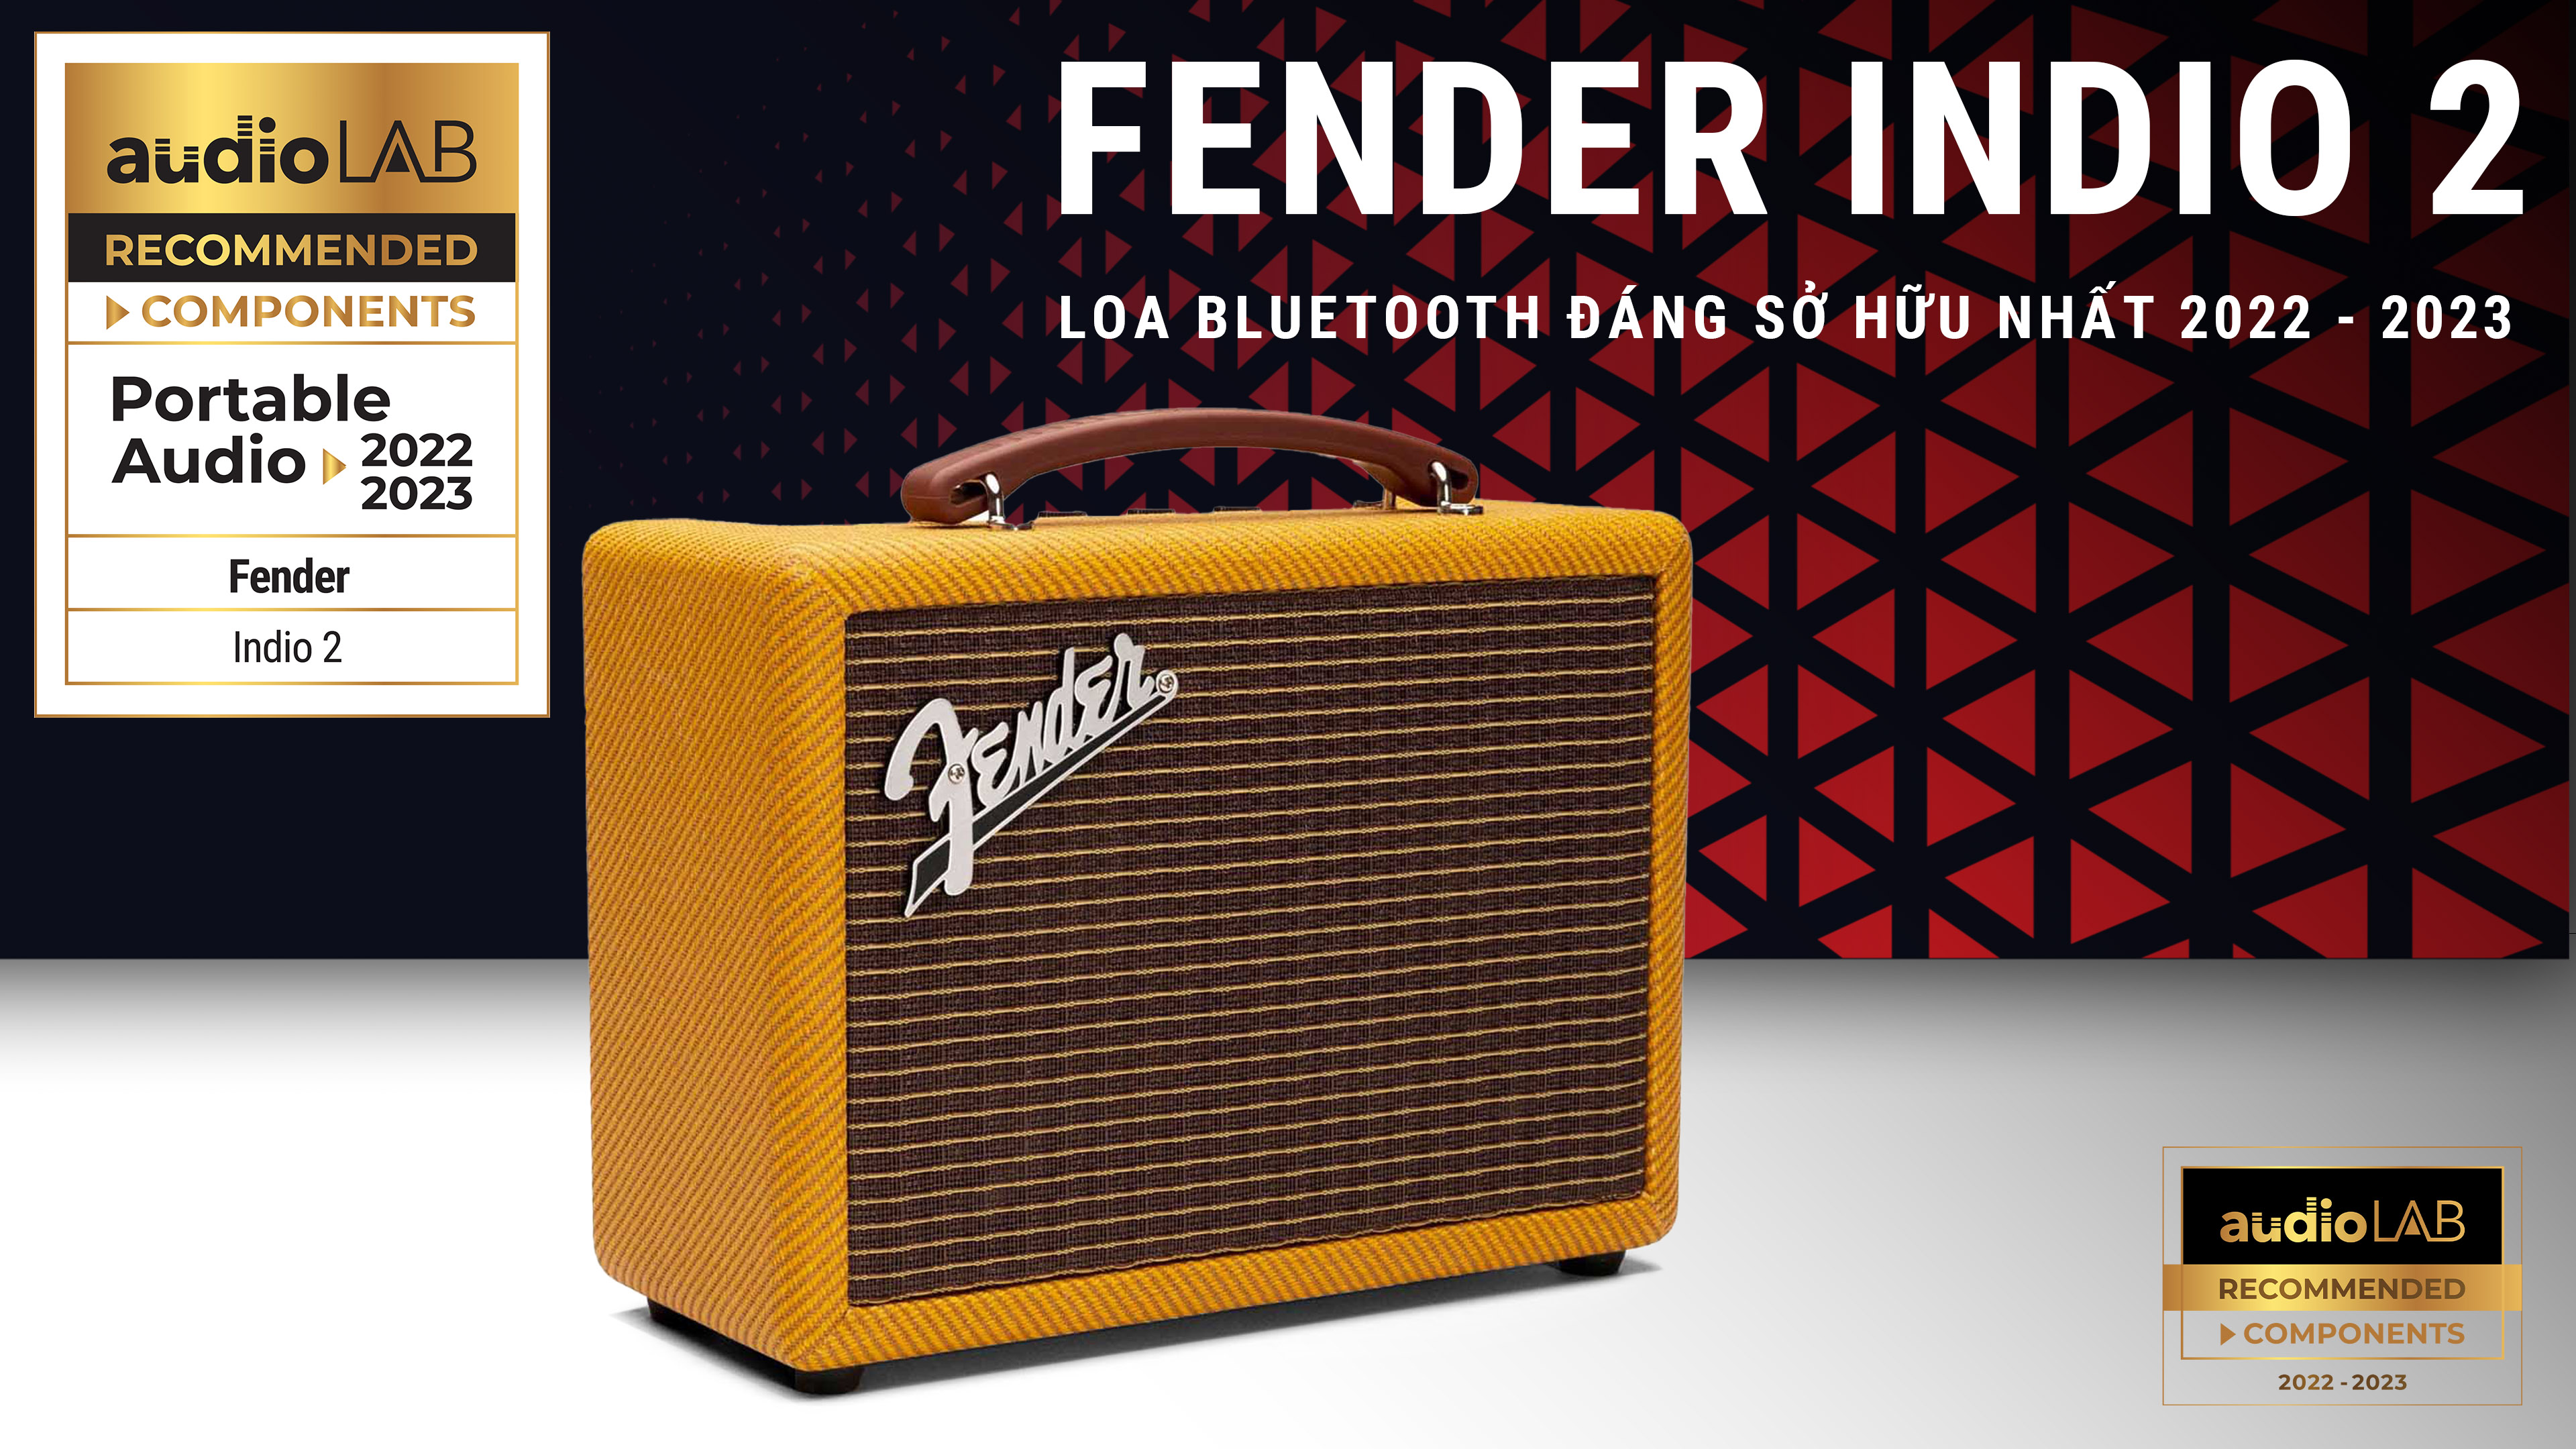 [Audio LAB Recommended] Fender Indio 2 - Loa Bluetooth đáng sở hữu nhất năm 2022 - 2023